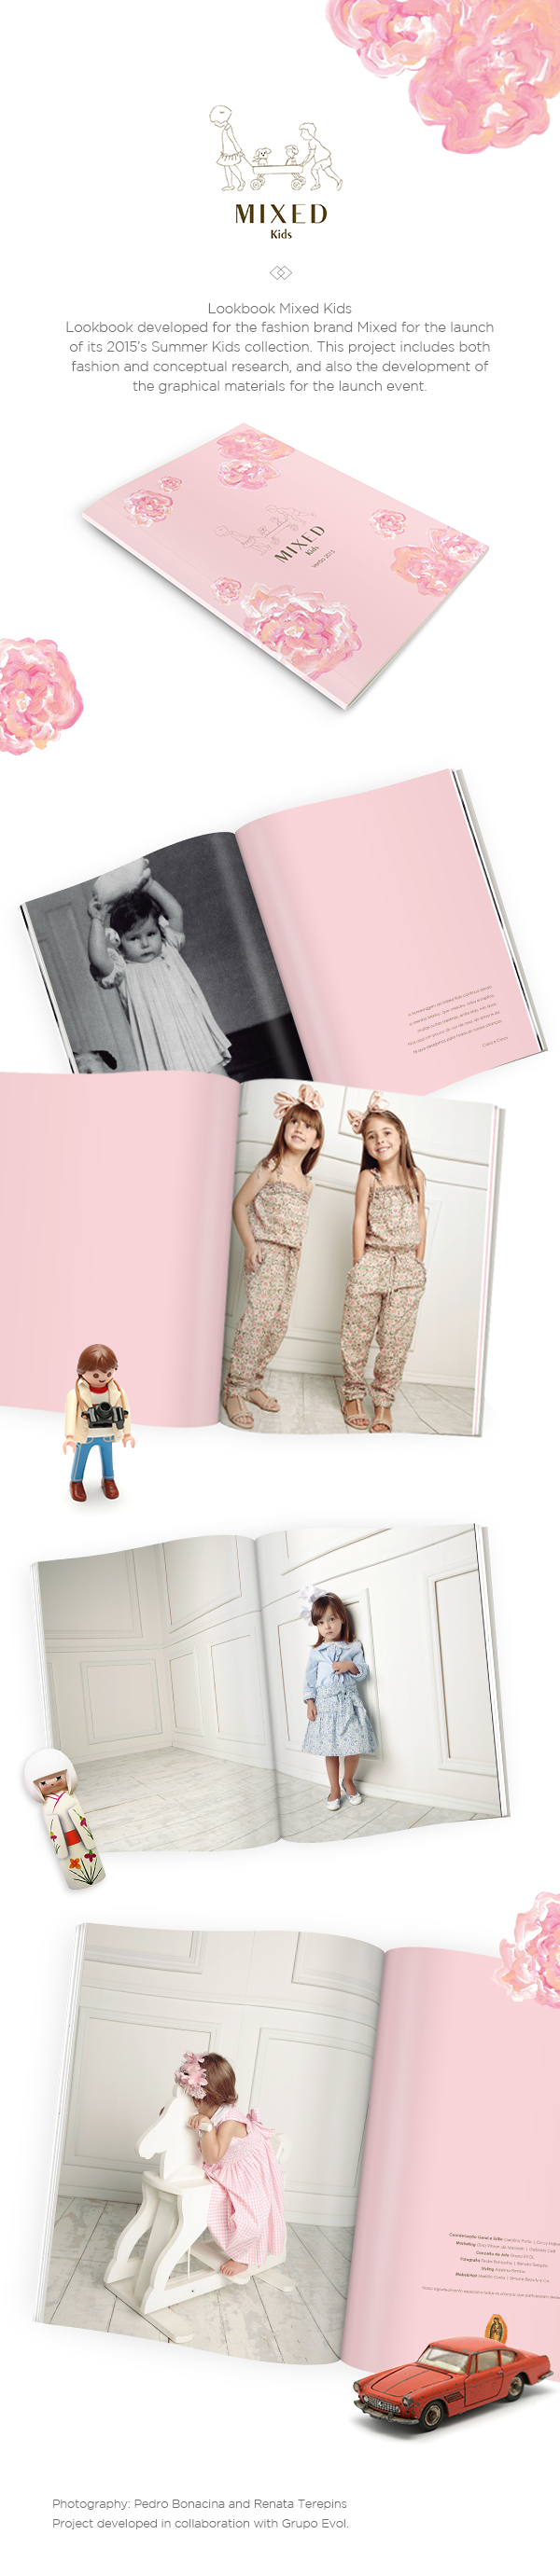 kids luxury brand Fashion catalog summer look book